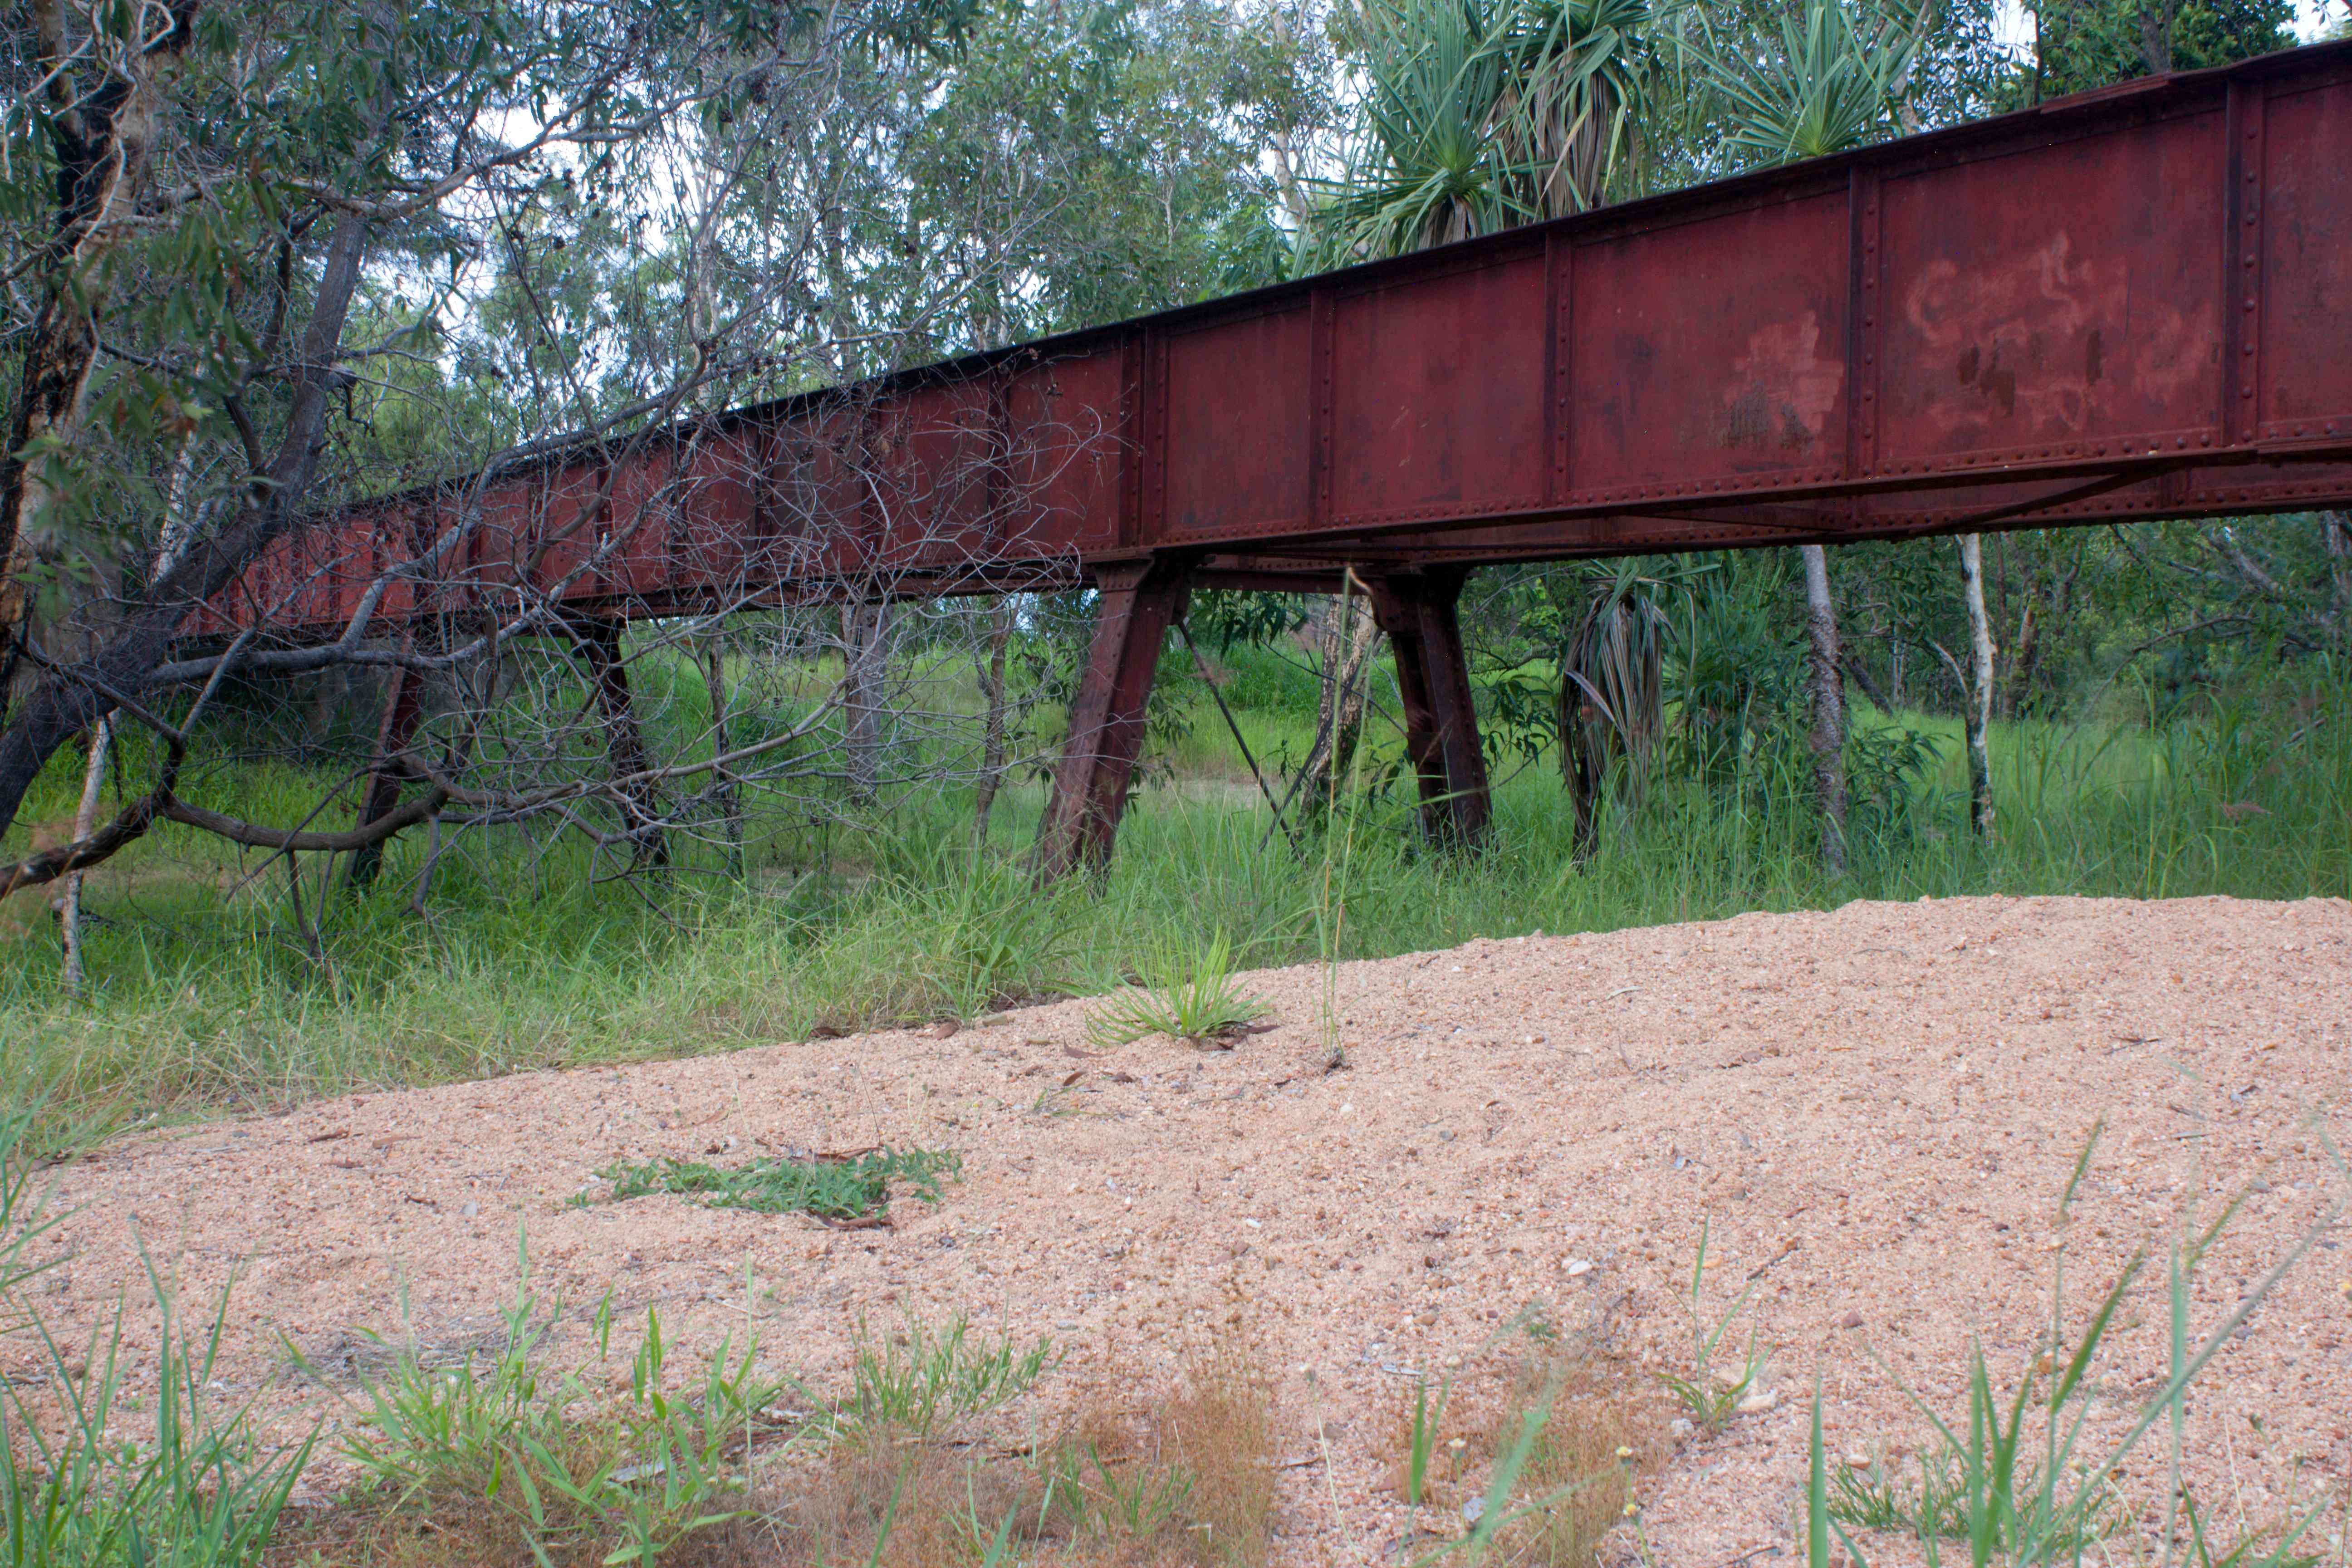 North Australia Railway Bridge, Pine Creek